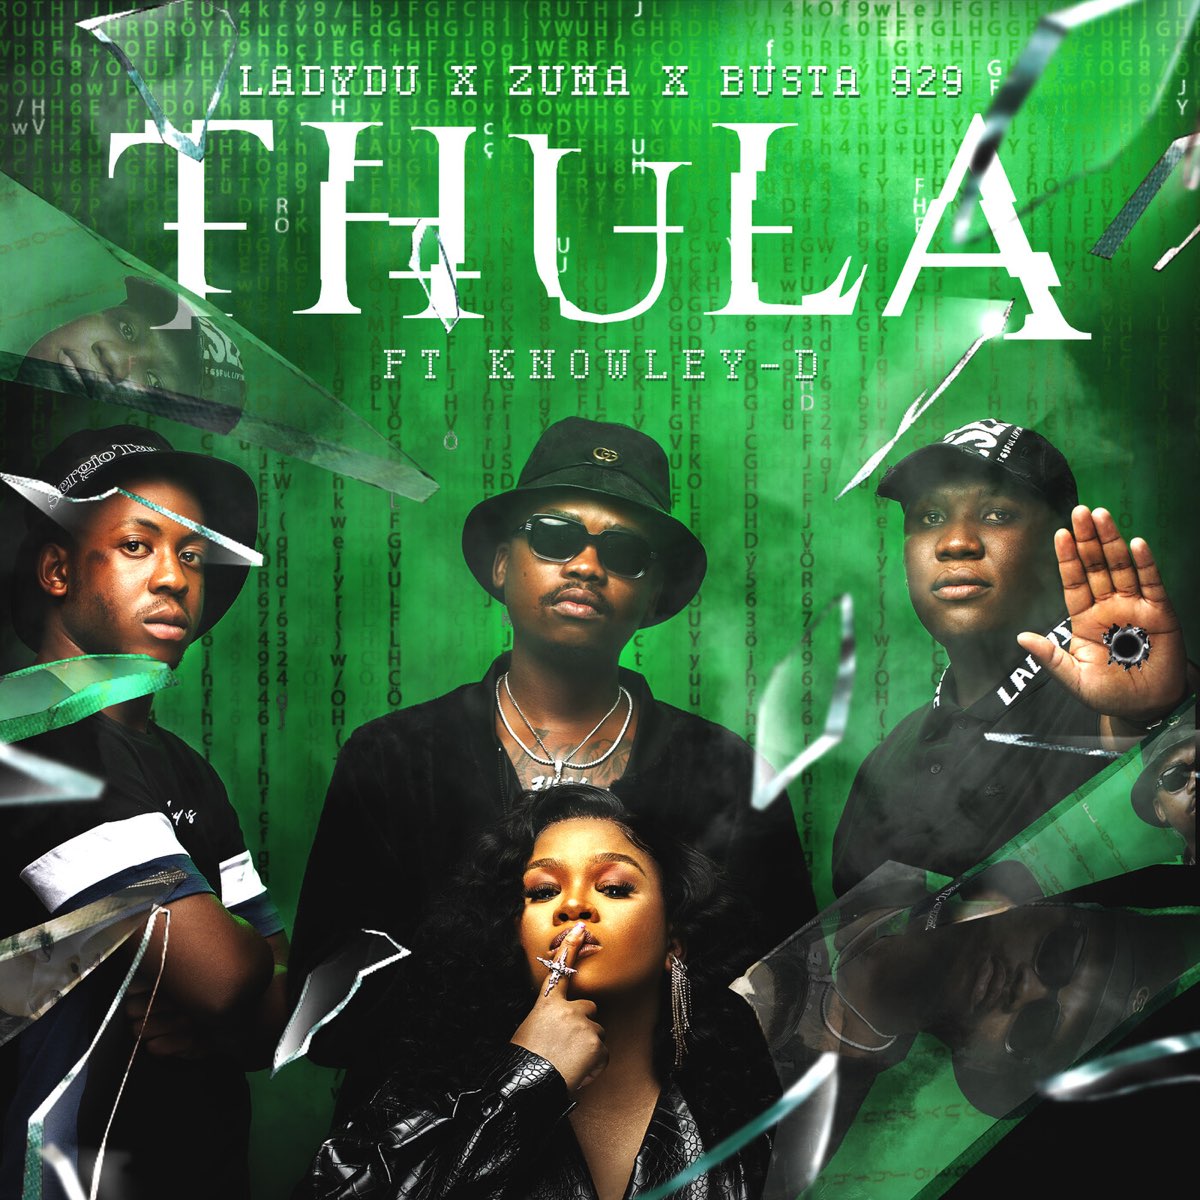 Lady Du, Zuma & Busta 929 - Thula (feat. KNOWLEY-D) mp3 download free lyrics